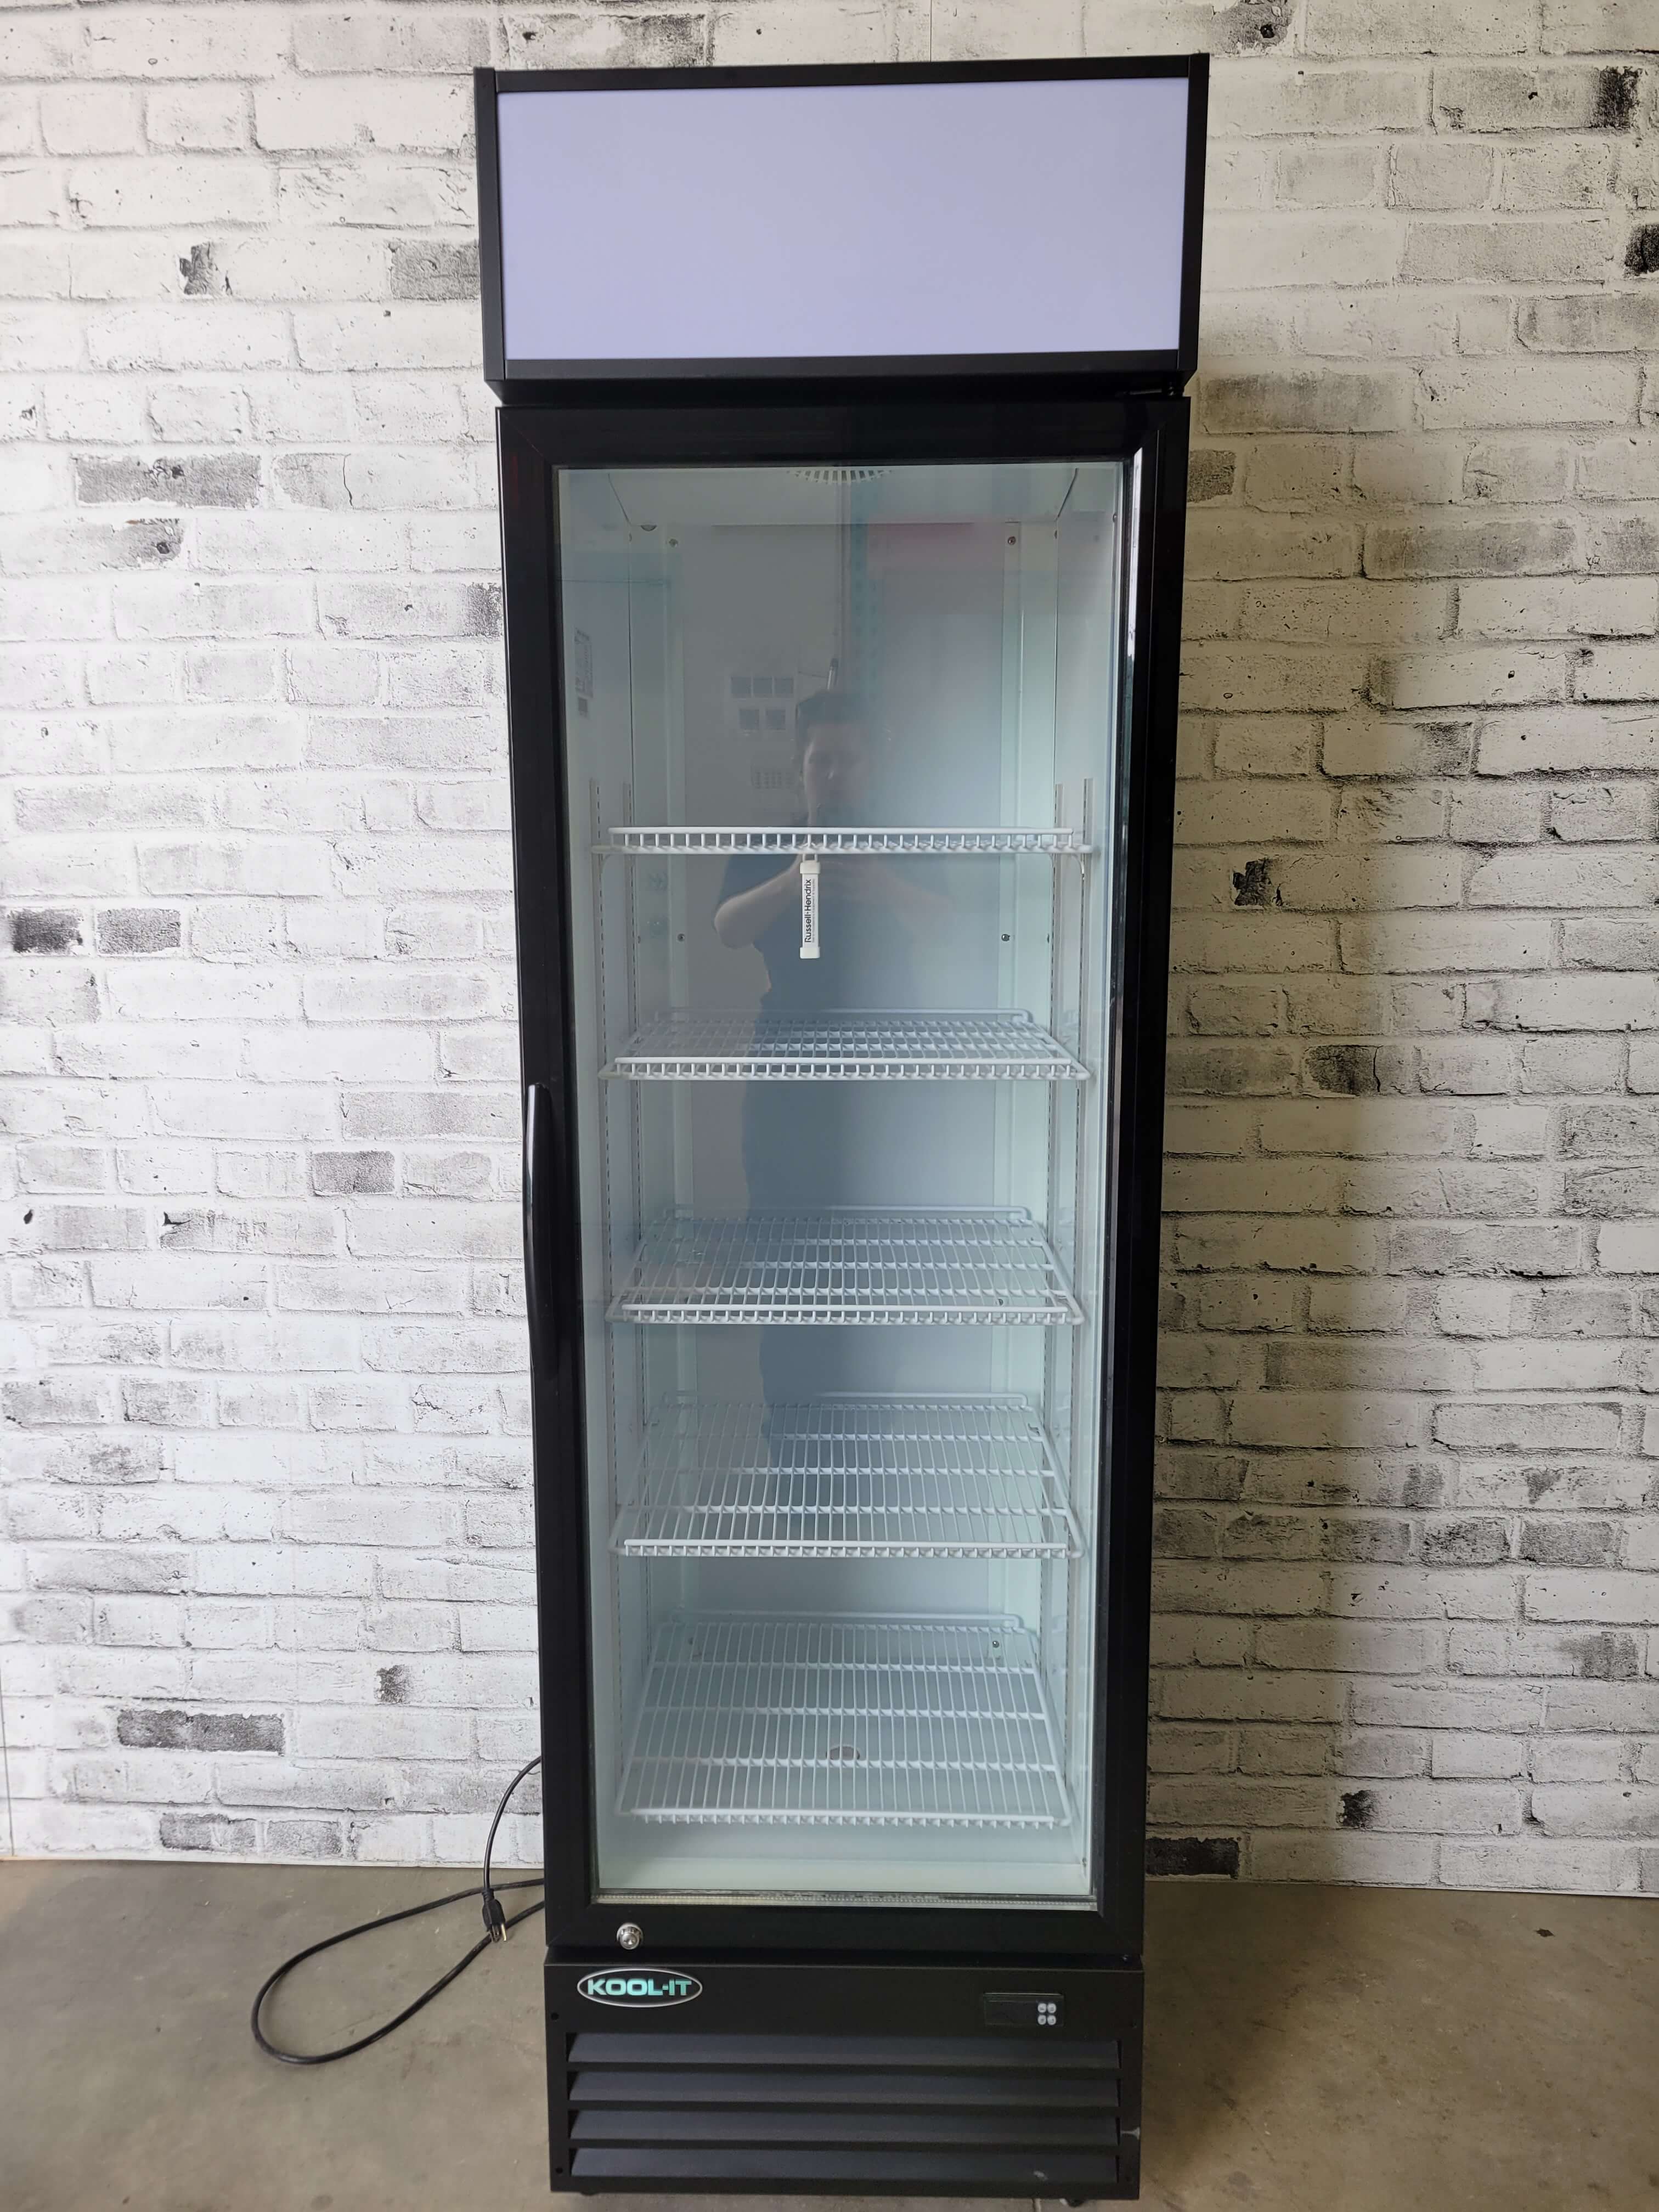 Thumbnail - Kool-It KGM-13 Glass Door Refrigerator (2)